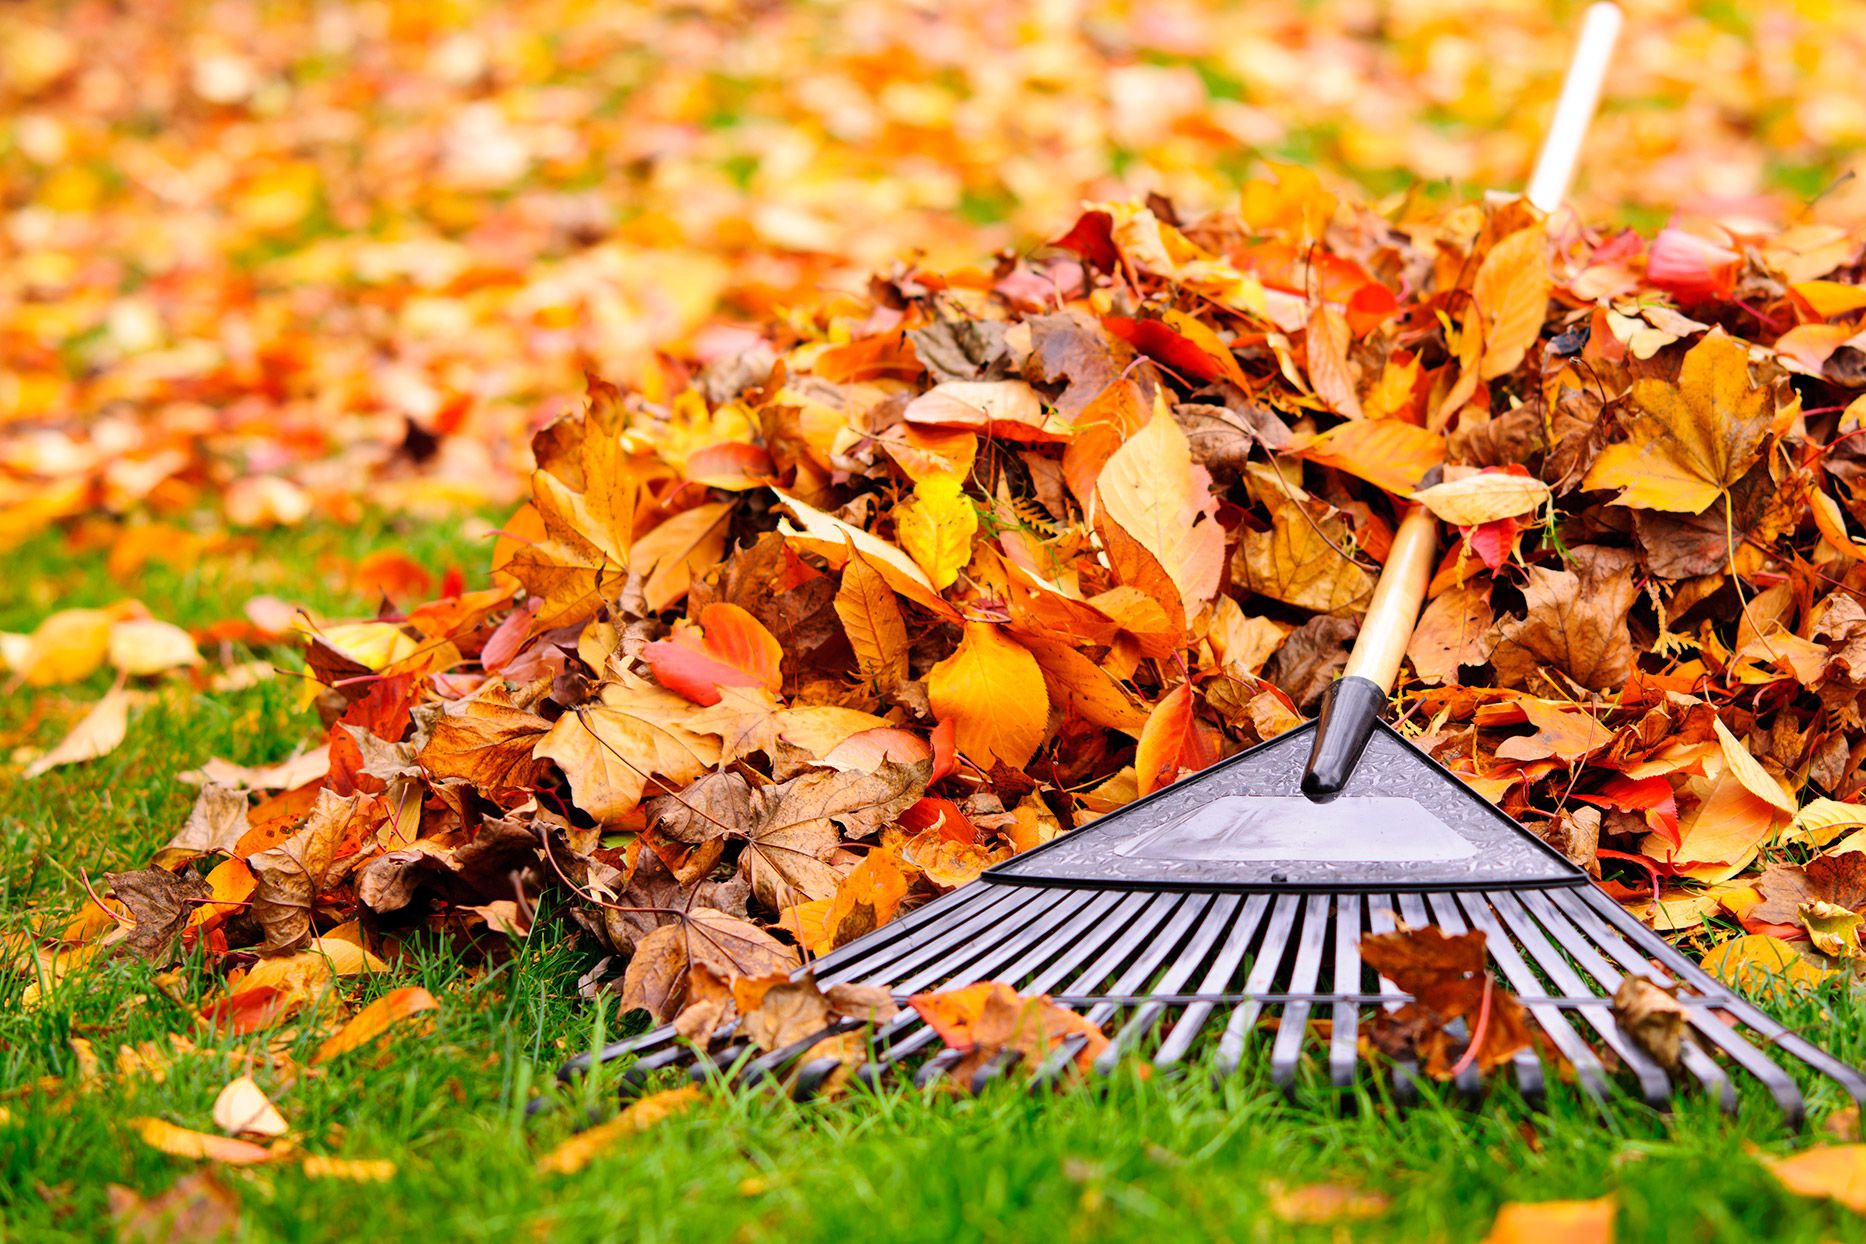 How to look after your garden during Autumn, autumn garden clearance, garden maintenance